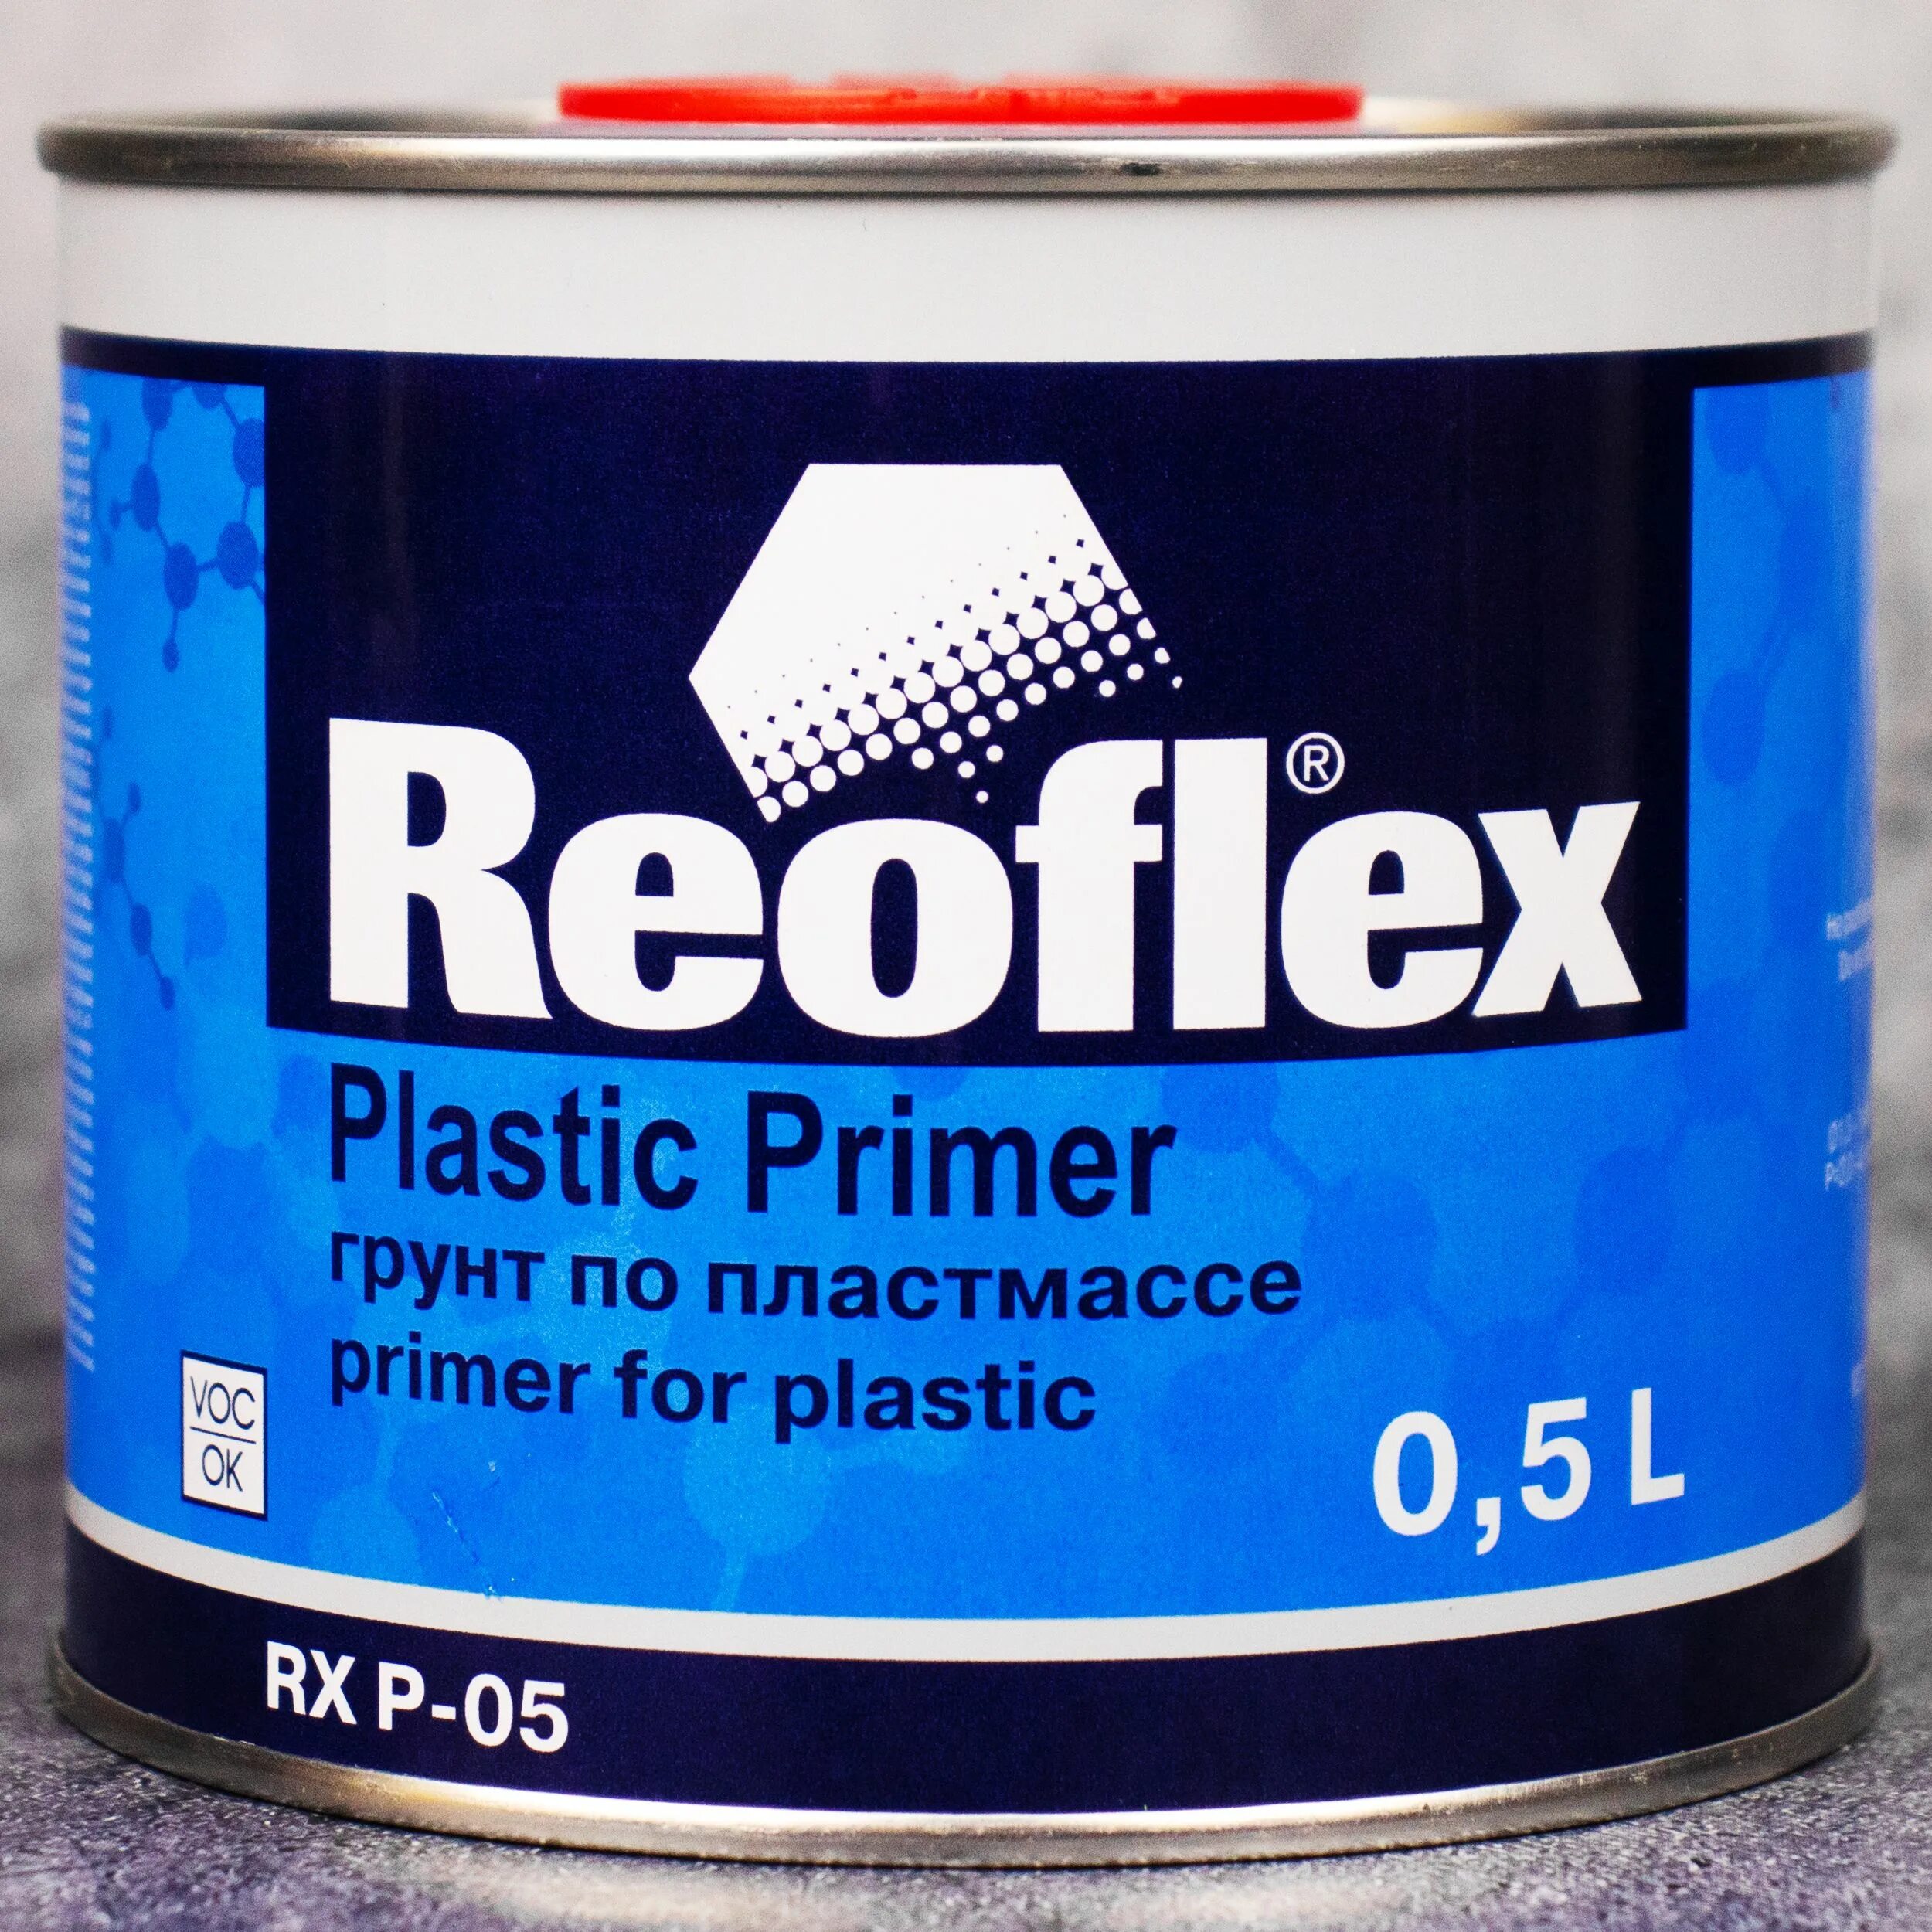 Грунт по пластику Reoflex RX P-05 серый. Reoflex Plastic primer грунт по пластмассе. Грунт Reoflex Plastic primer прозрачный. Грунт по пластику реофлекс 5+1.